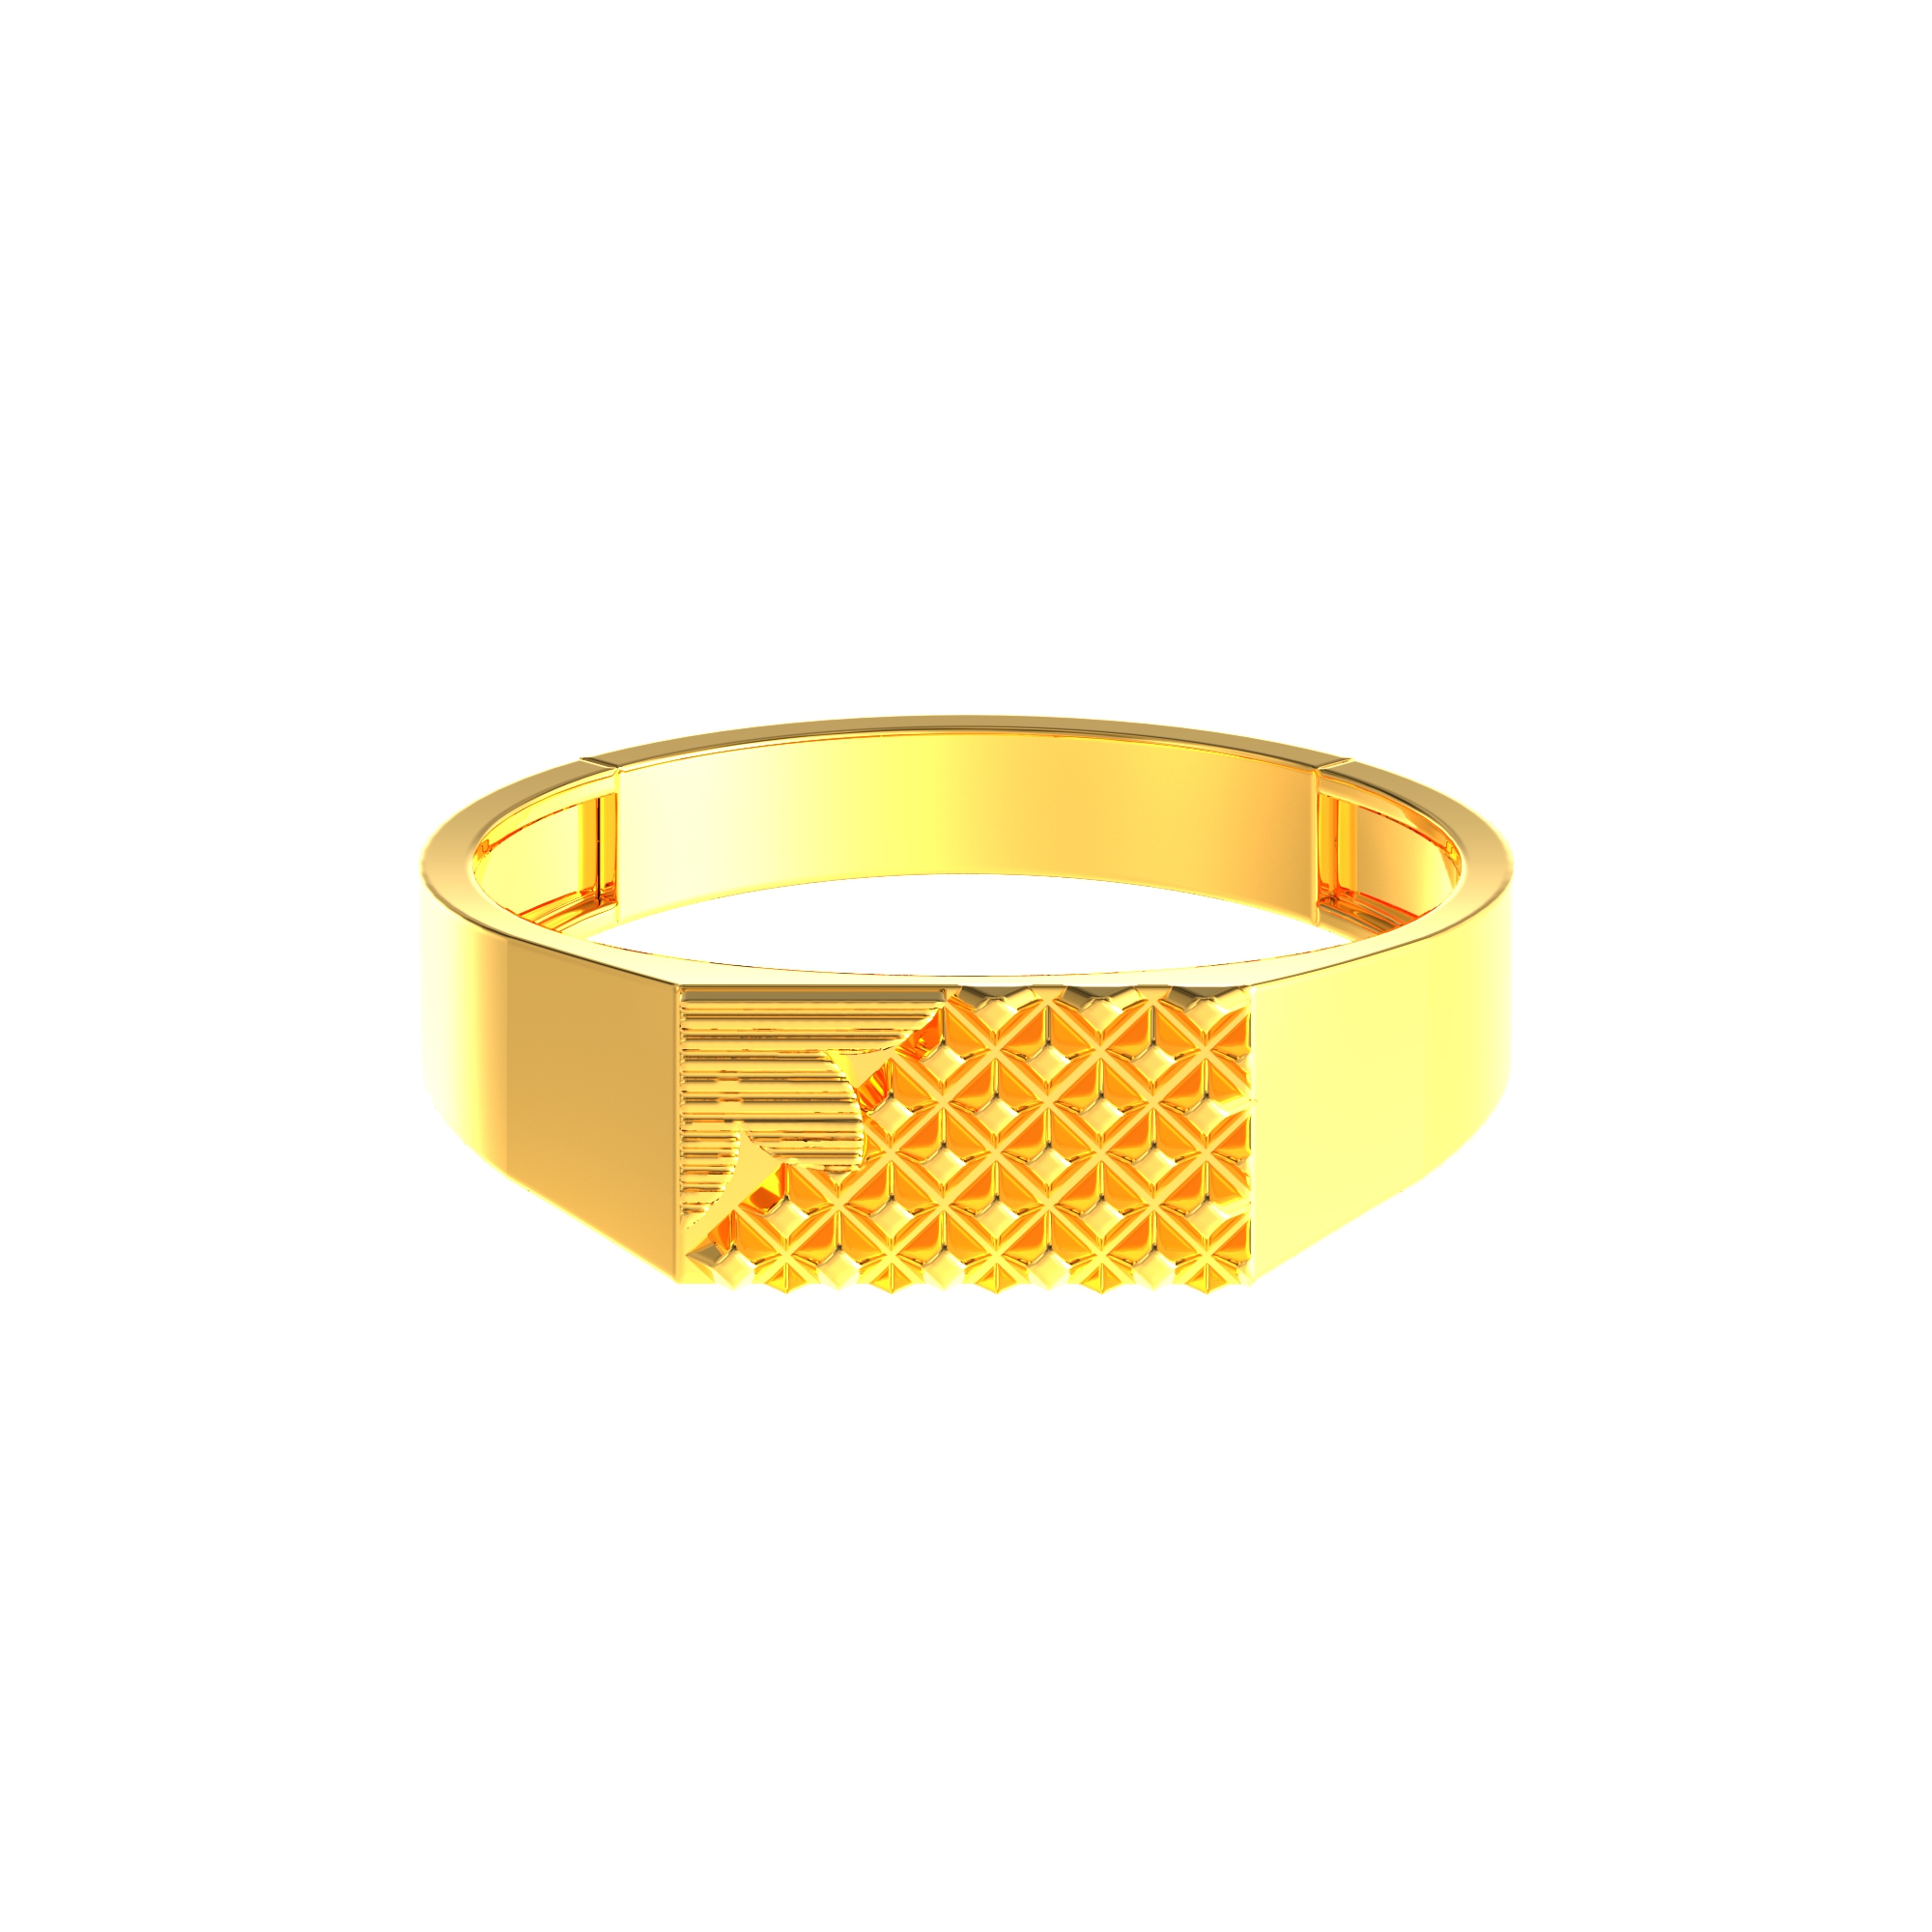 Square Shape Gold Ring